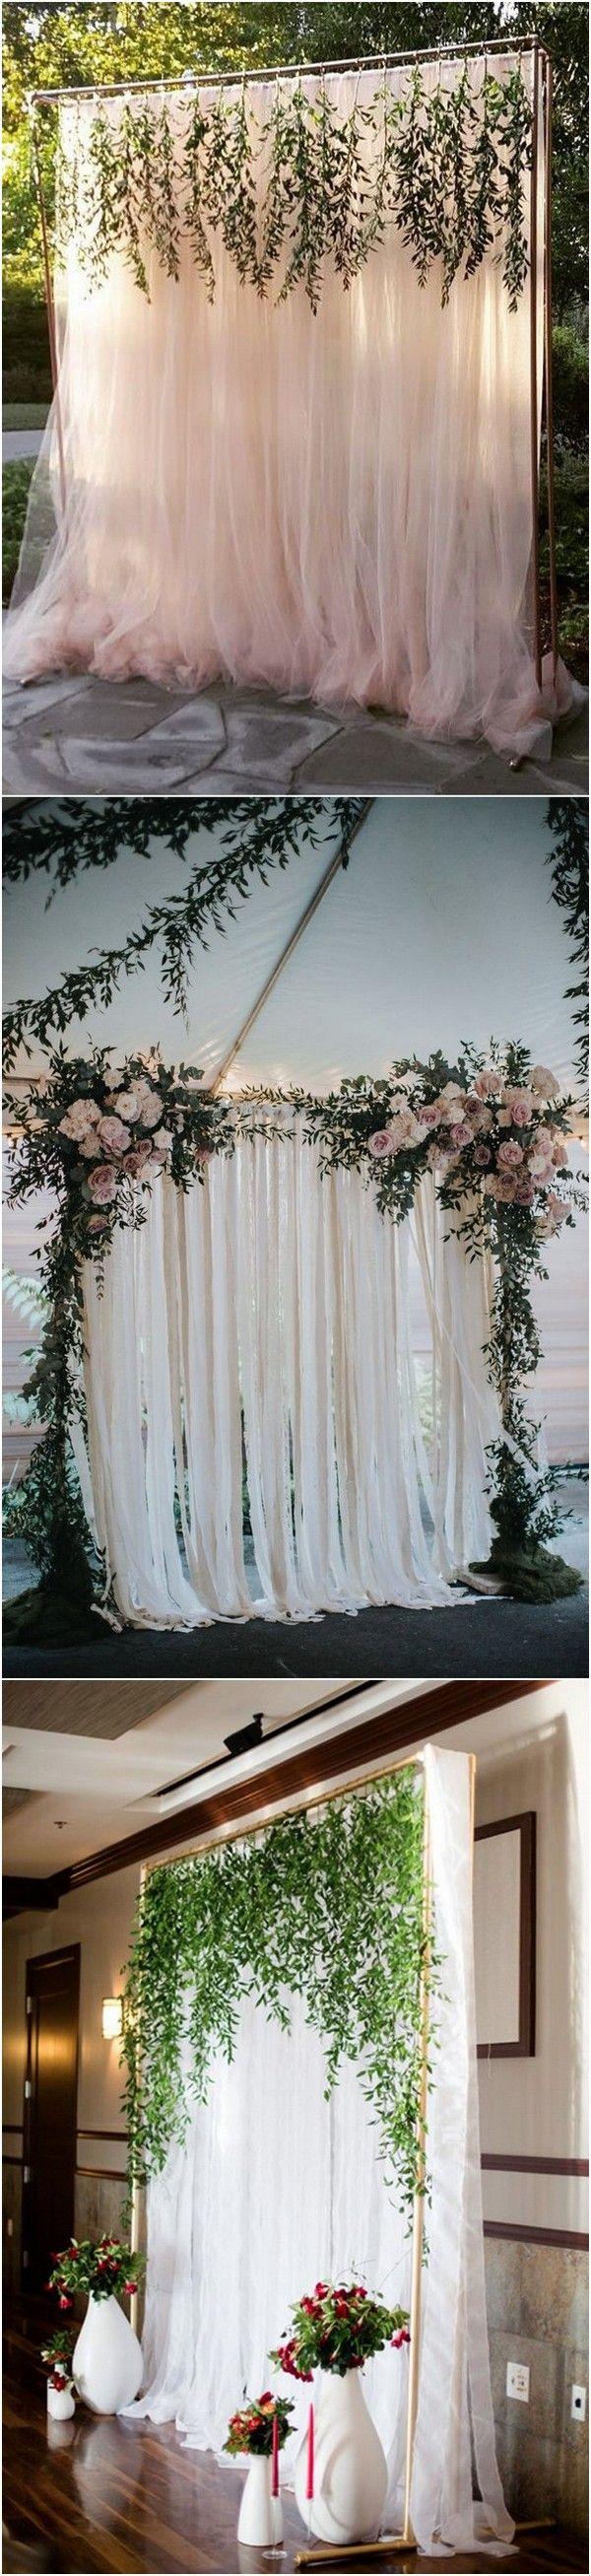 زفاف - Trending-15 Hottest Wedding Backdrop Ideas For Your Ceremony - Page 2 Of 3